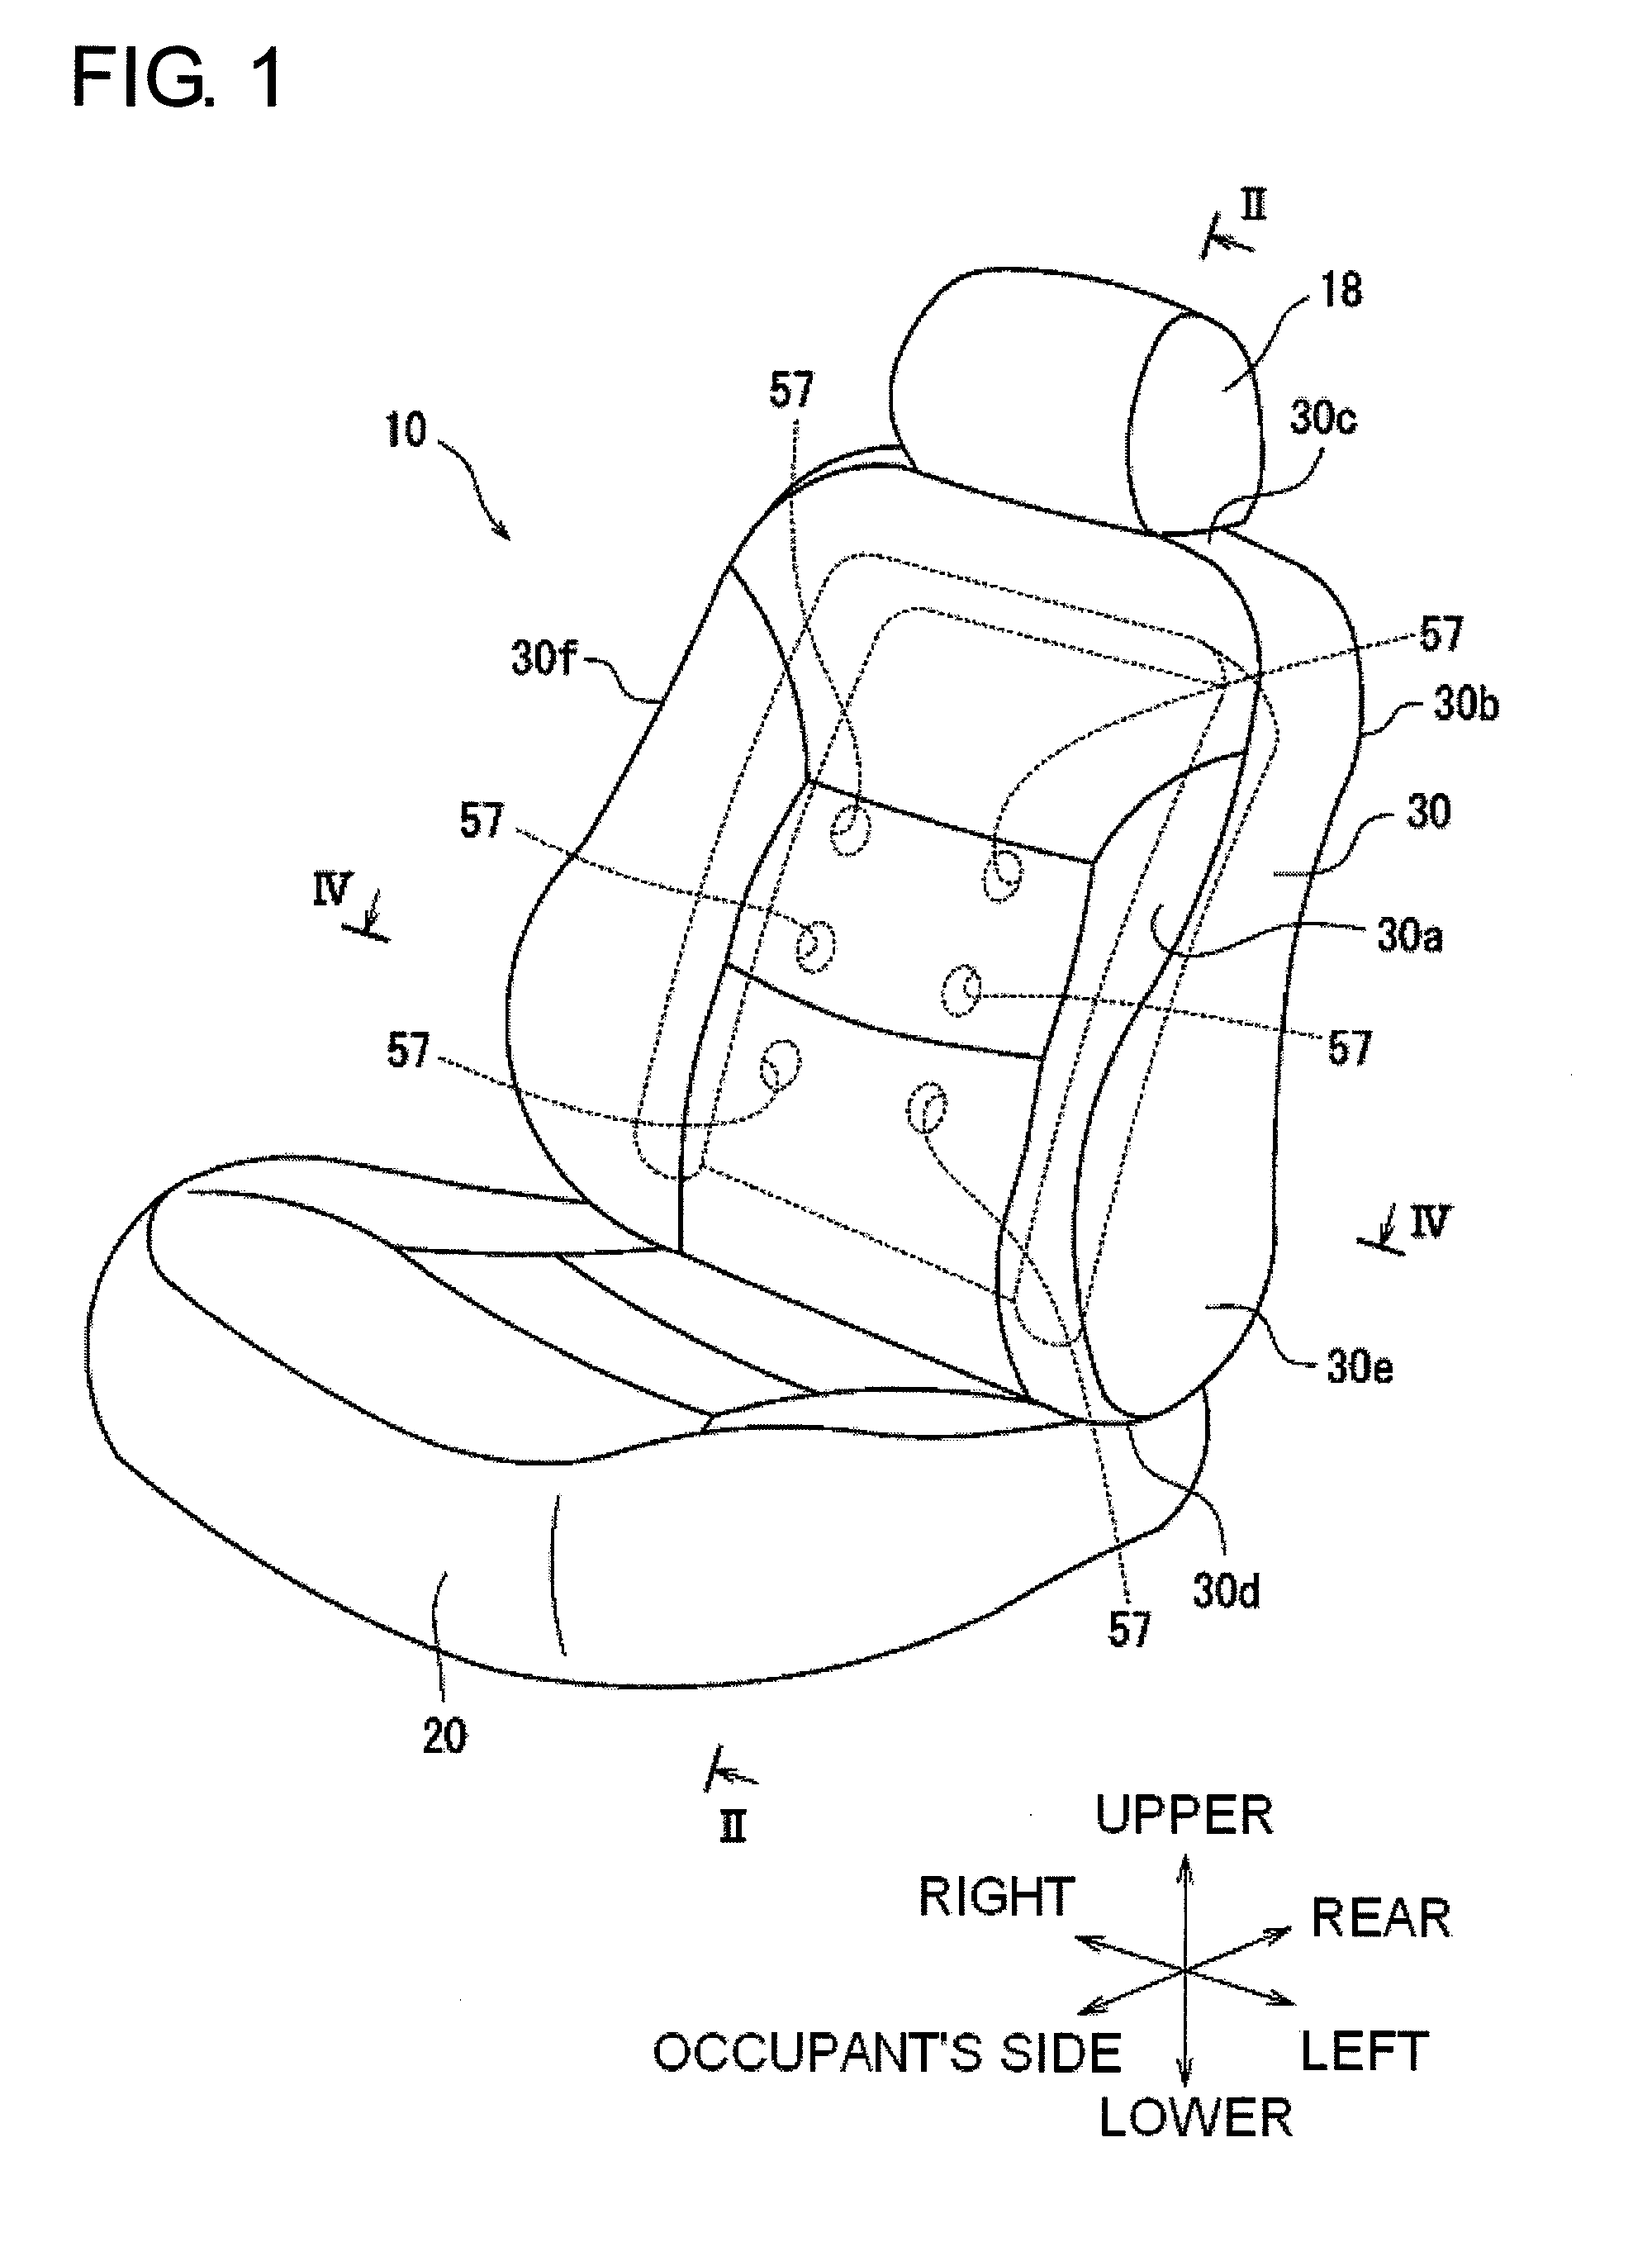 Vehicle seat